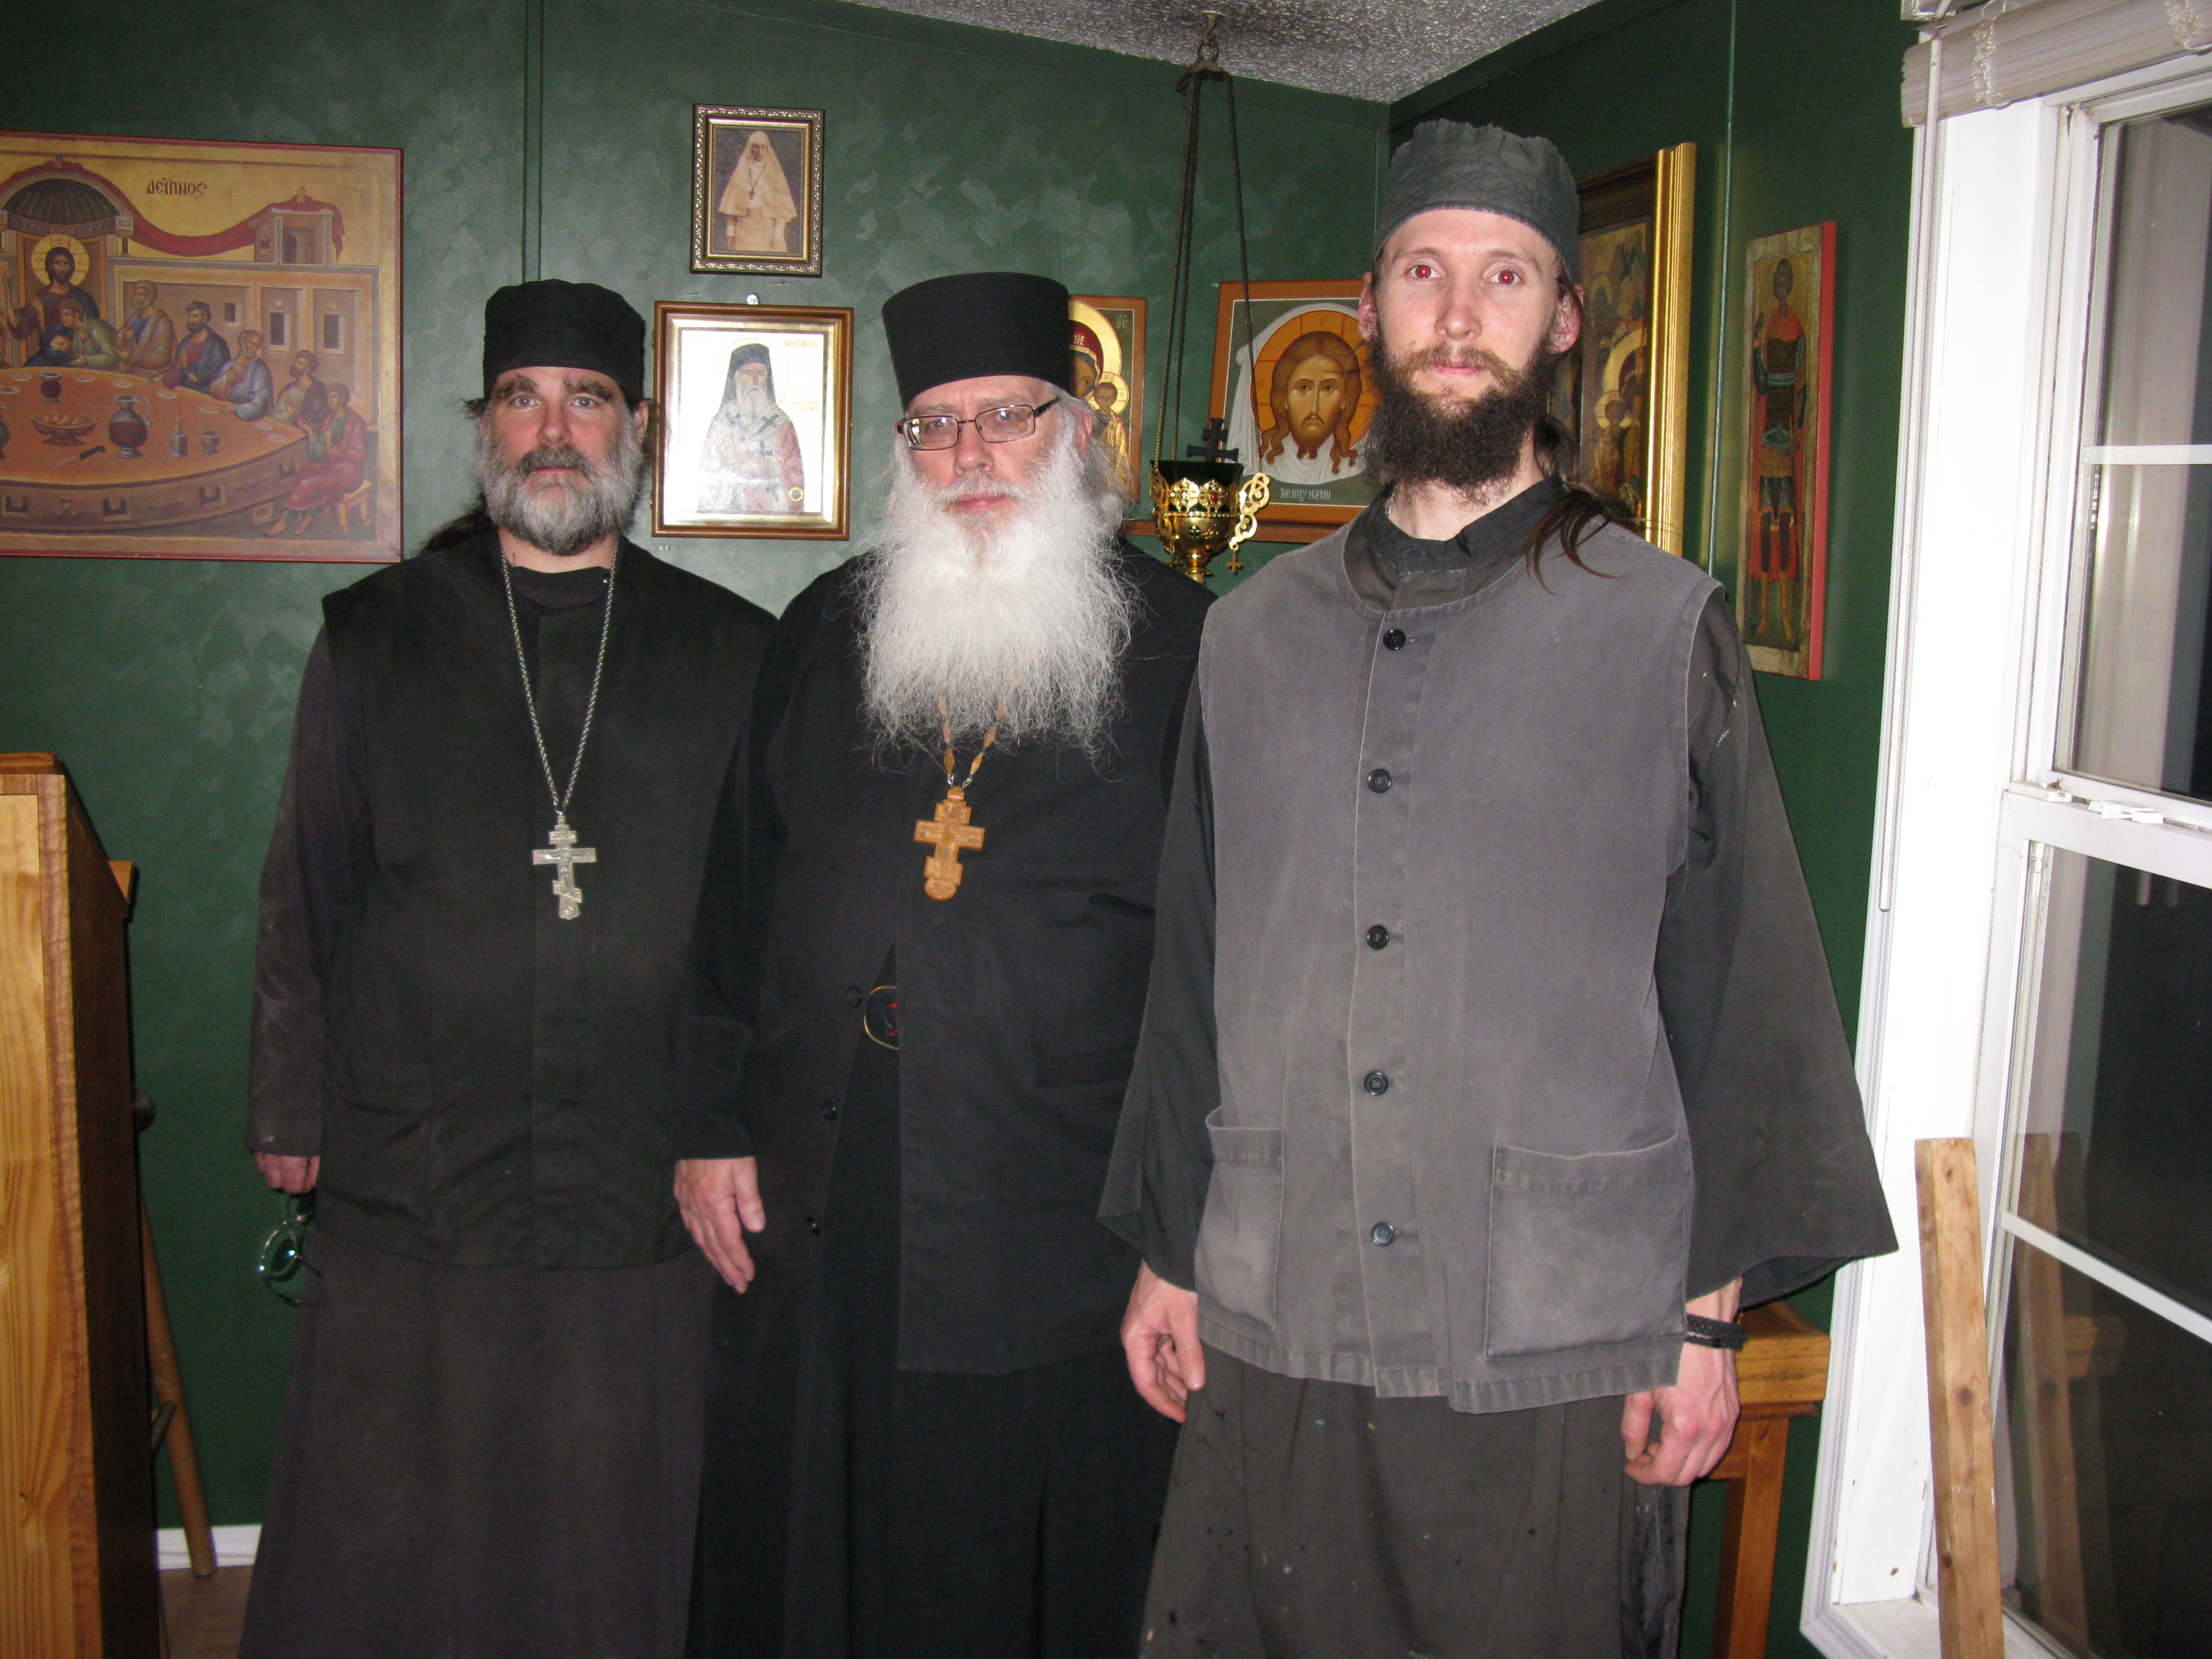 Left to right, Priest Seraphim Holland, Igumen Seraphim, Hierodeacon Sergius in the Monastery Trapeza. http://www/orthodox.net/photos/2011-02-hermitage-of-the-holy-cross/2011-02-hermitage-of-the-holy-cross-retreat-priest-seraphim-igumen-seraphim-hierodeacon-sergius.jpg